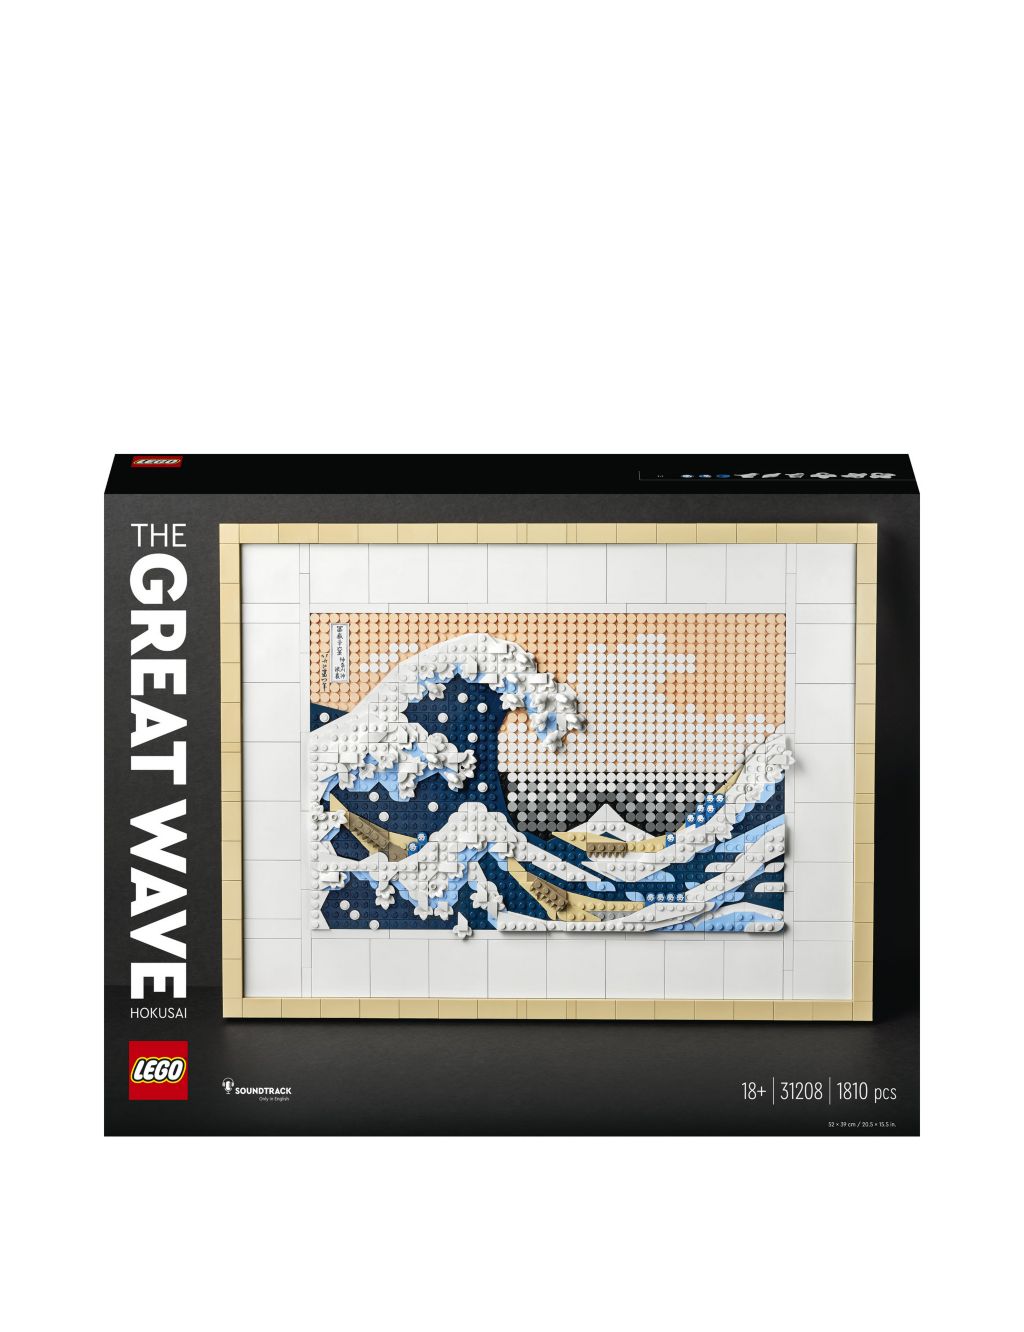 LEGO ART Hokusai - The Great Wave Craft Set 31208 (18+ Yrs) 1 of 7